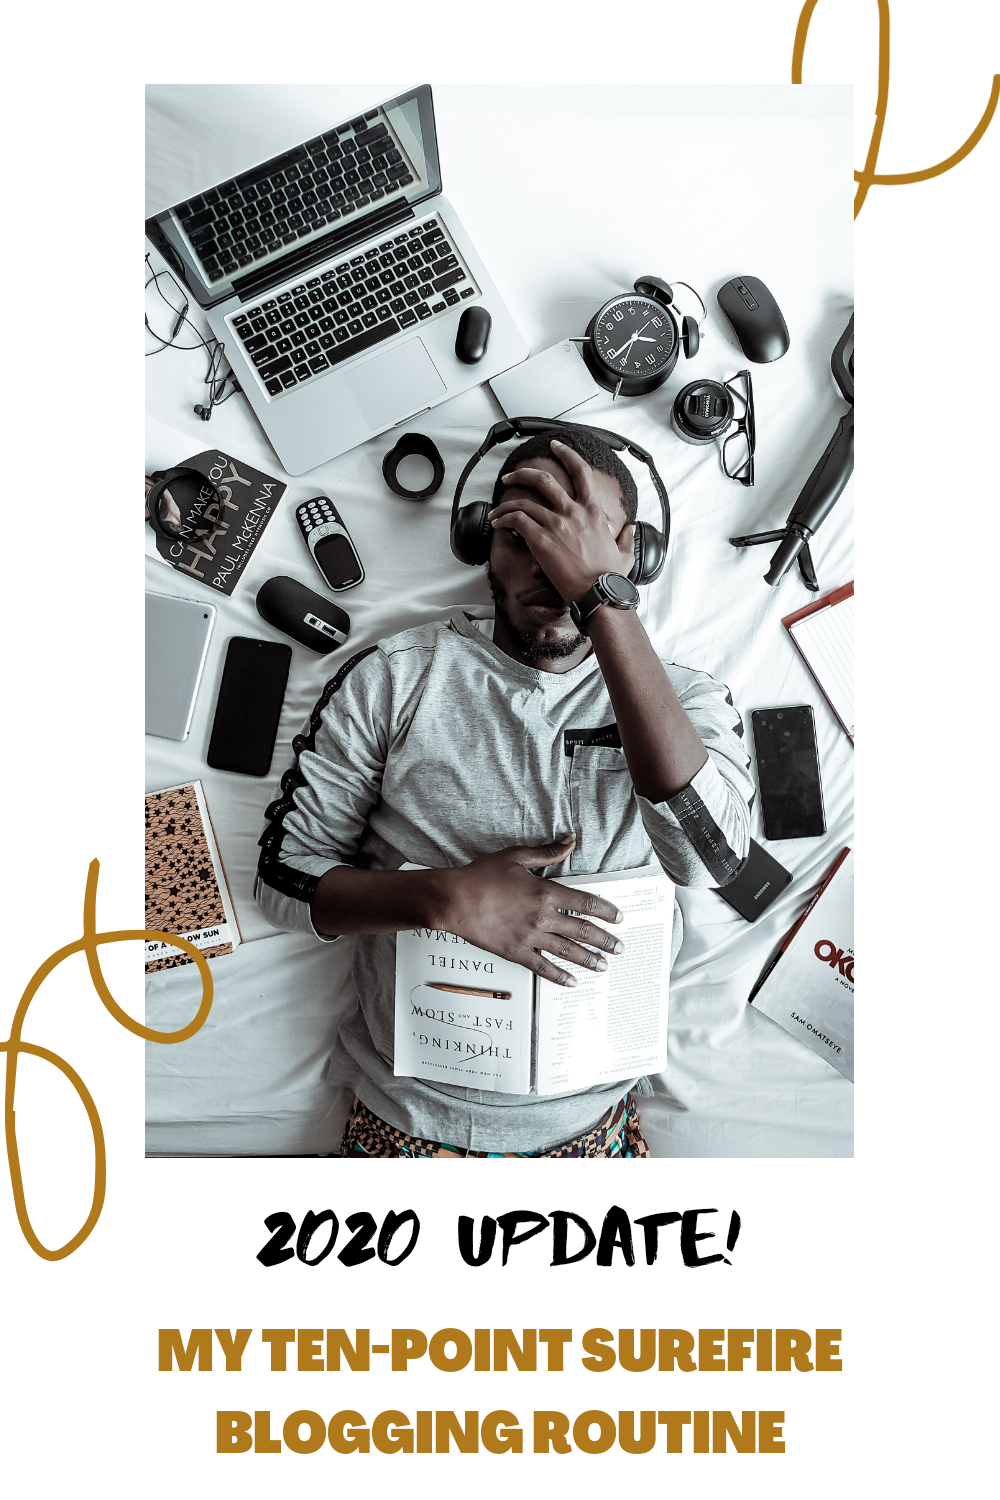 Ultimate blogging routine 2020